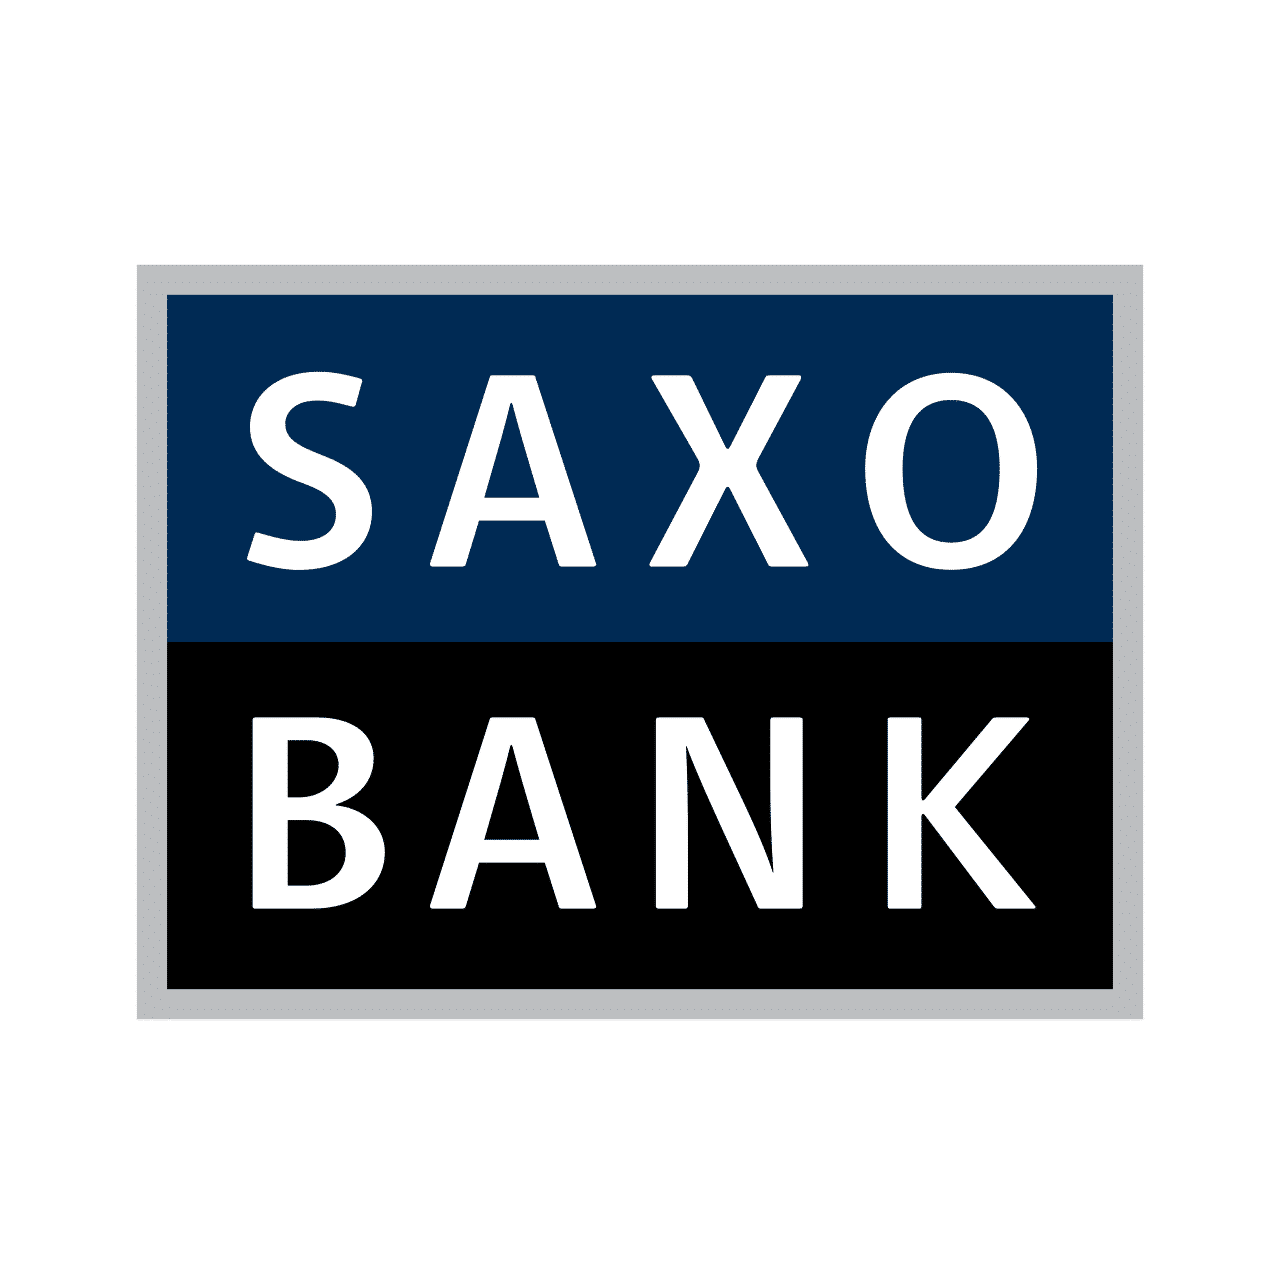 Saxo bank forex options